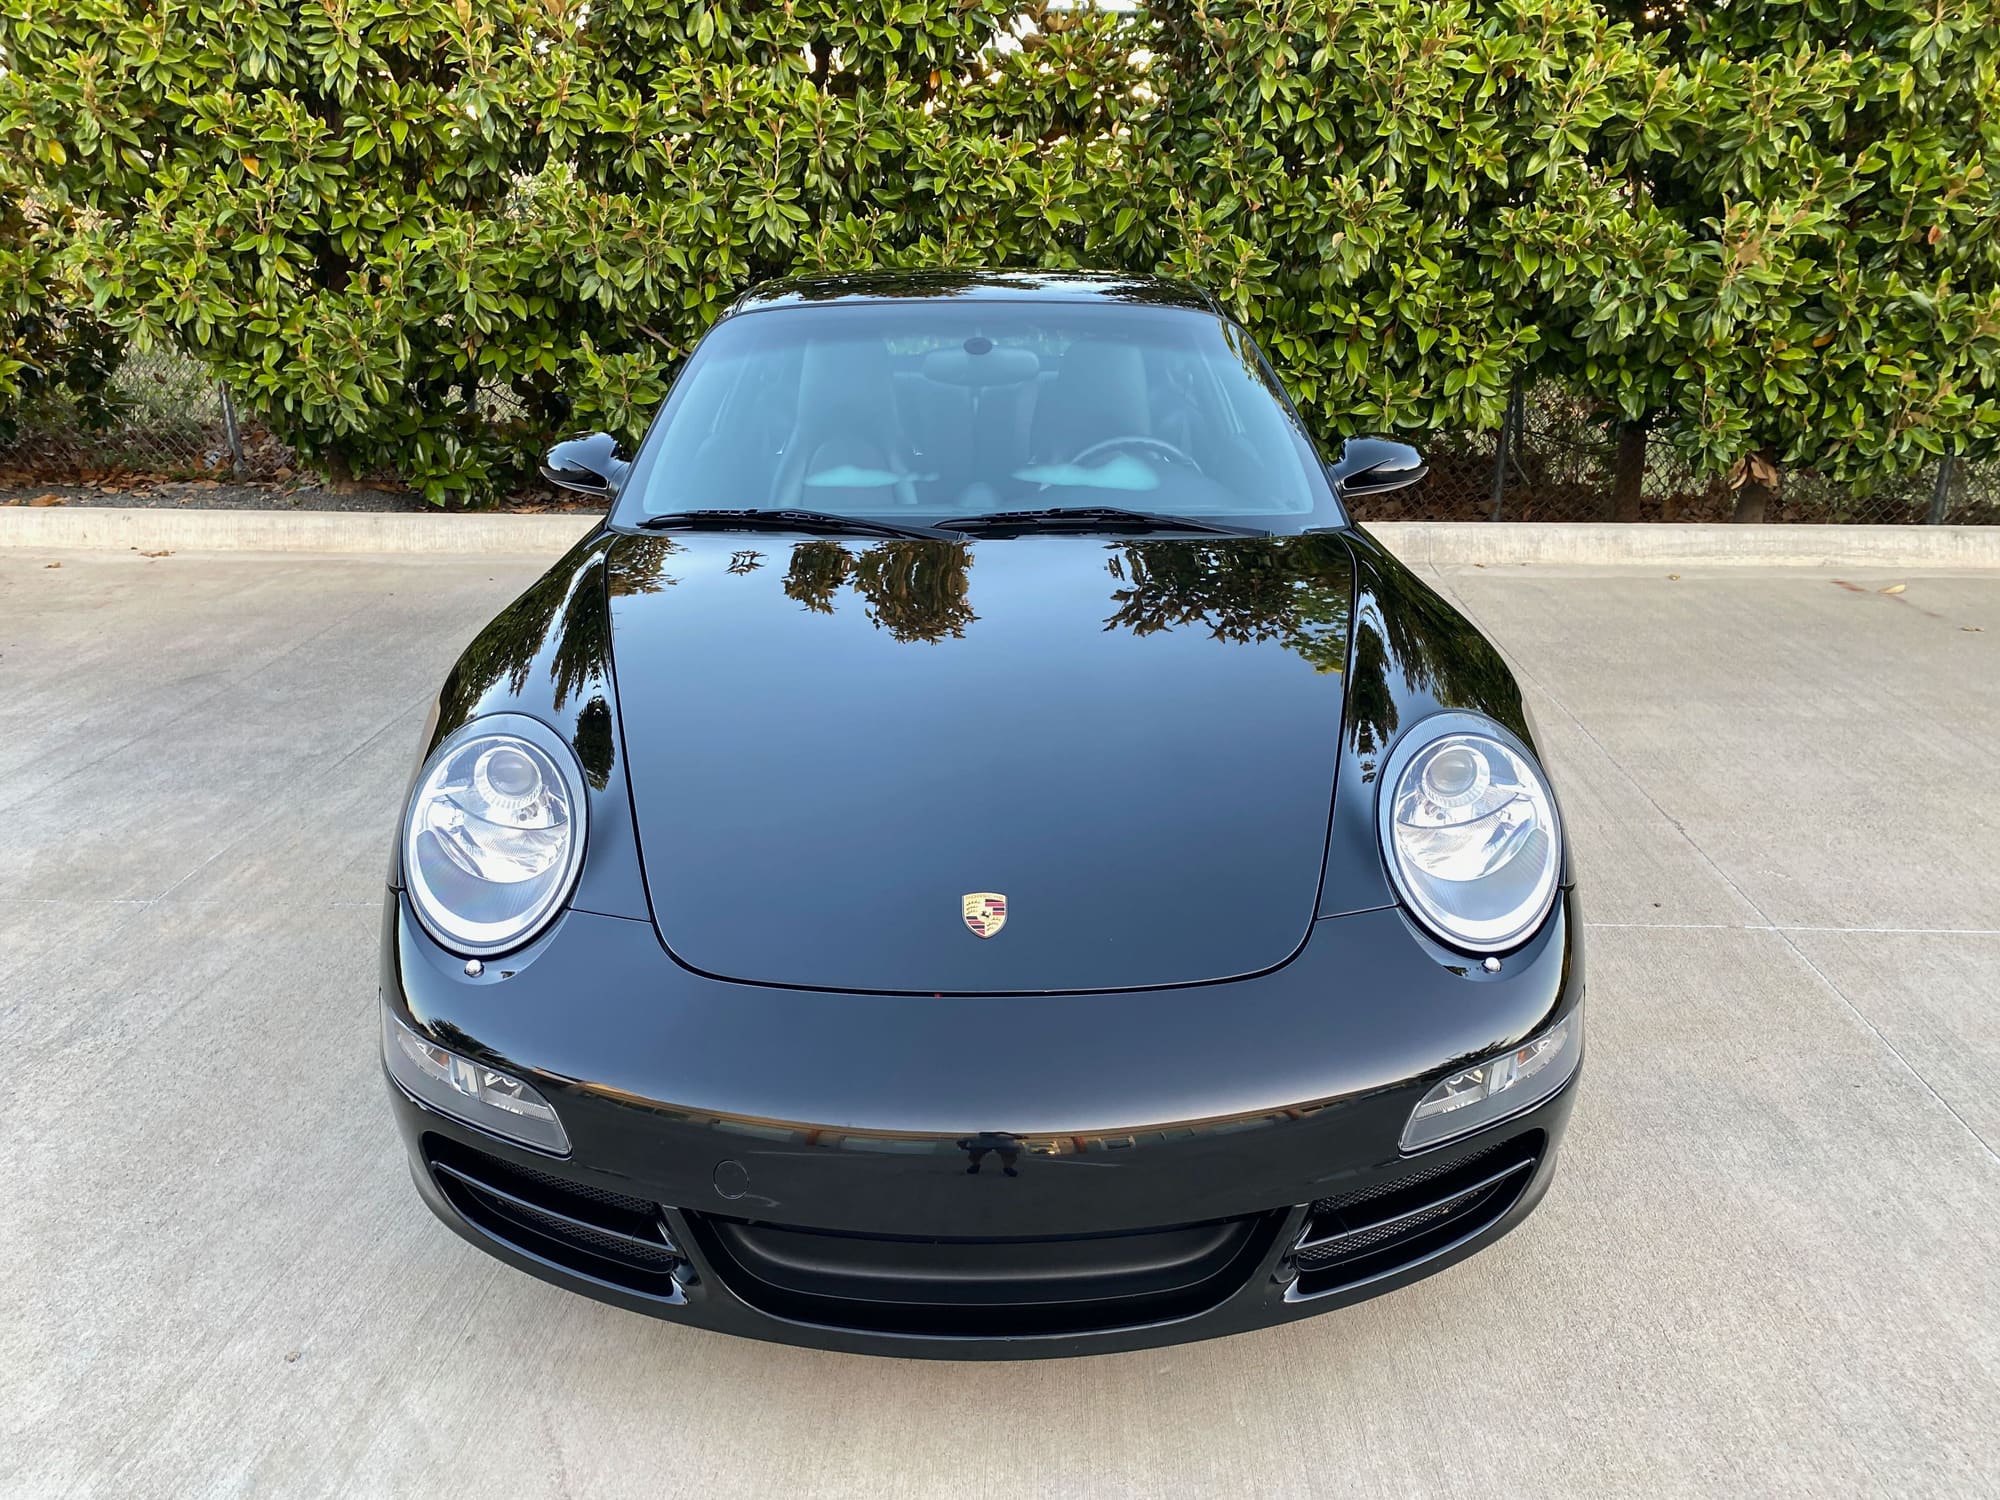 2001 Porsche 911 - 2007 Porsche 911 C2S Coupe (997S) 6 Speed.  Black/Black 53k miles - Used - Dallas, TX 75231, United States